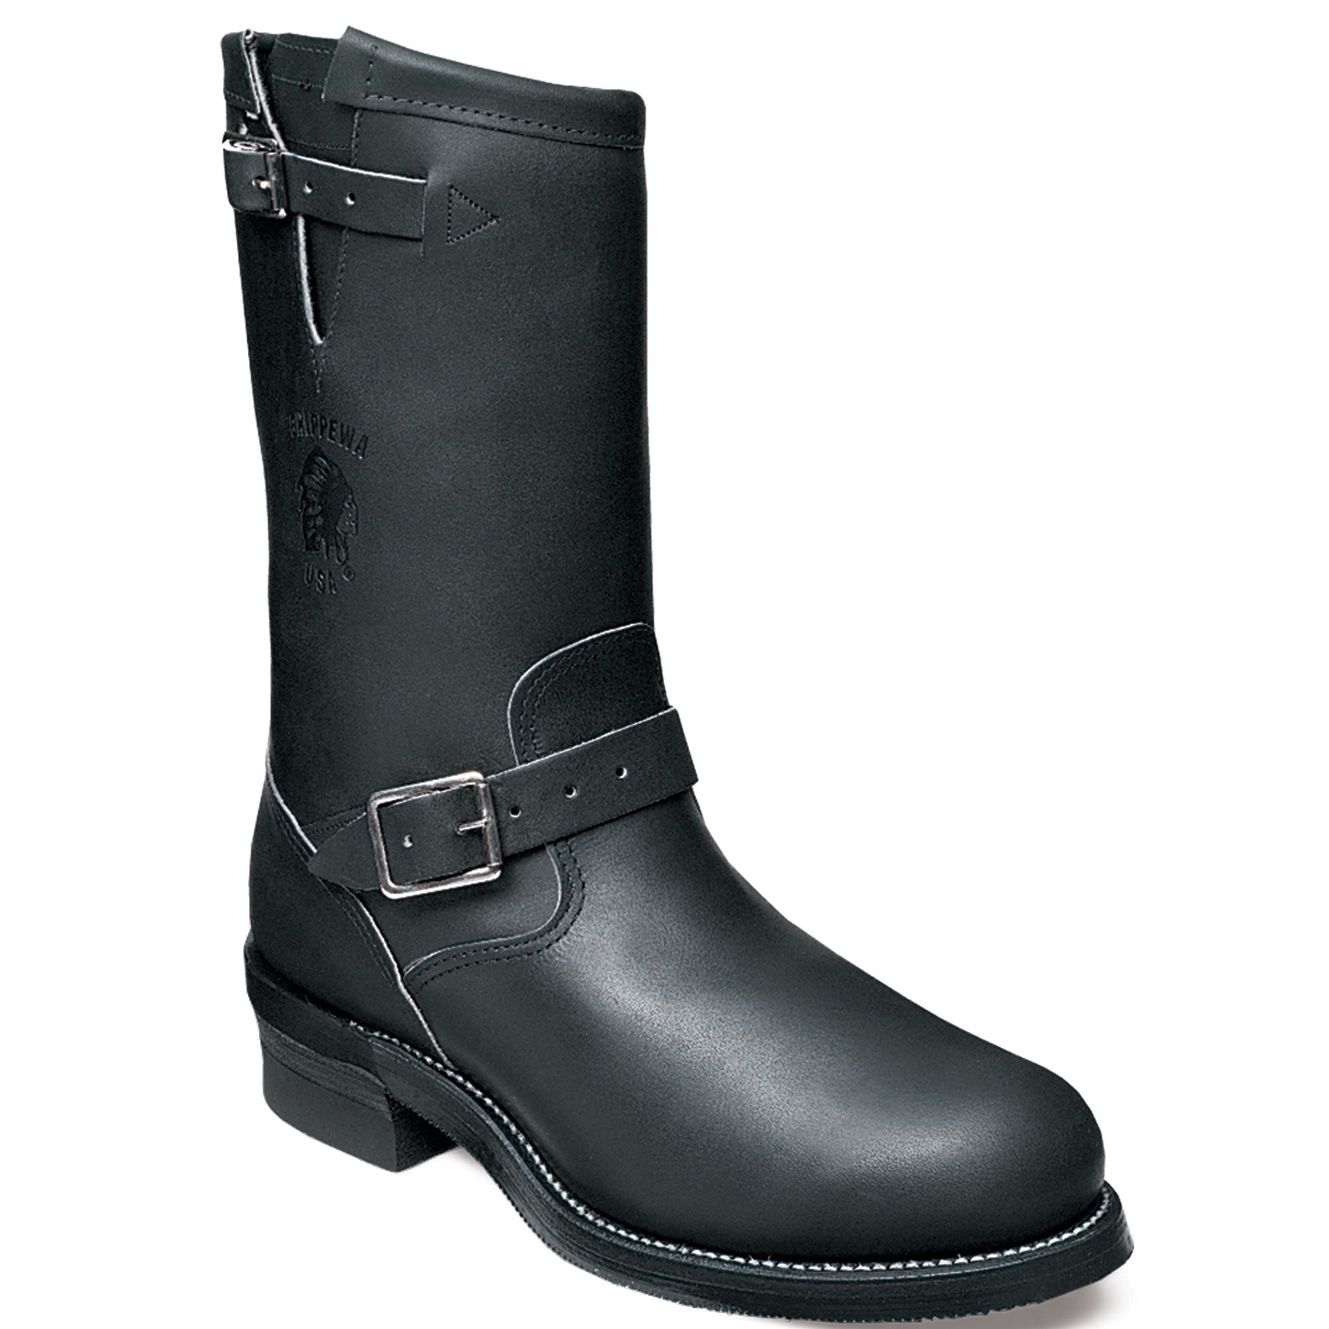 Men's 27863 11" Engineer Steel Toe Work Boot - Black